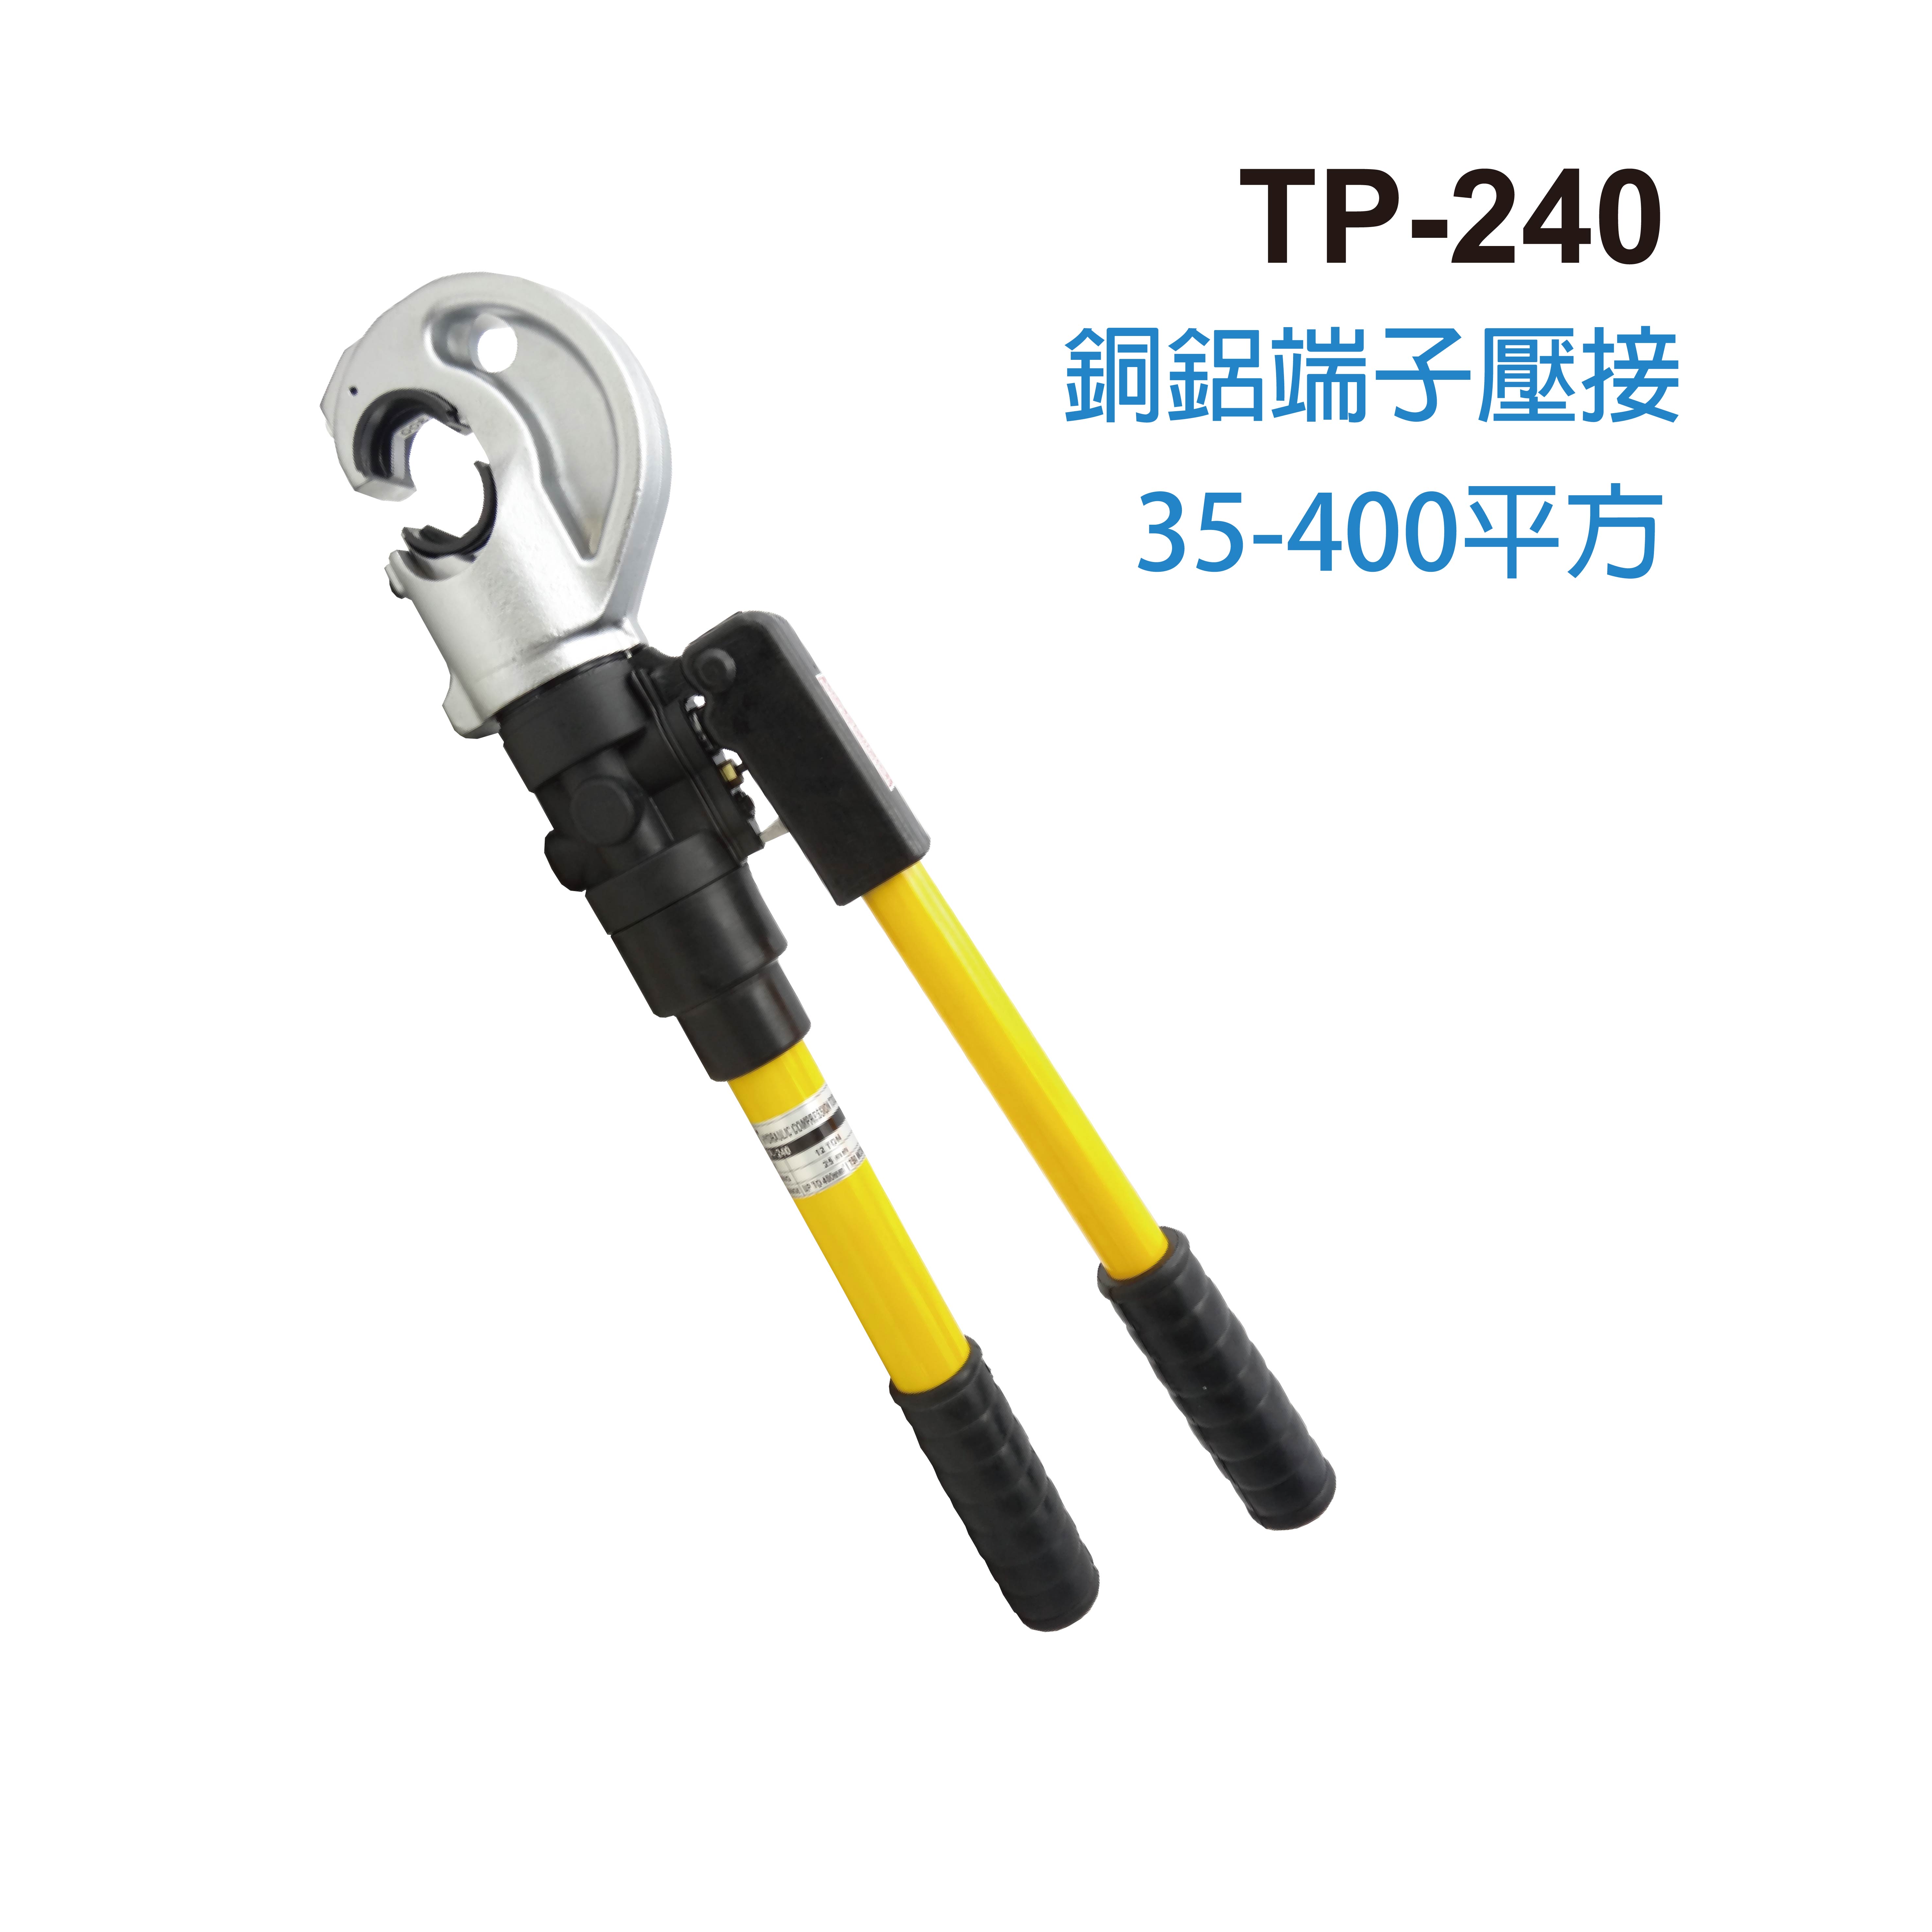 TP-240 MANUAL HYDRAULIC CRIMPING TOOLS-TP-240